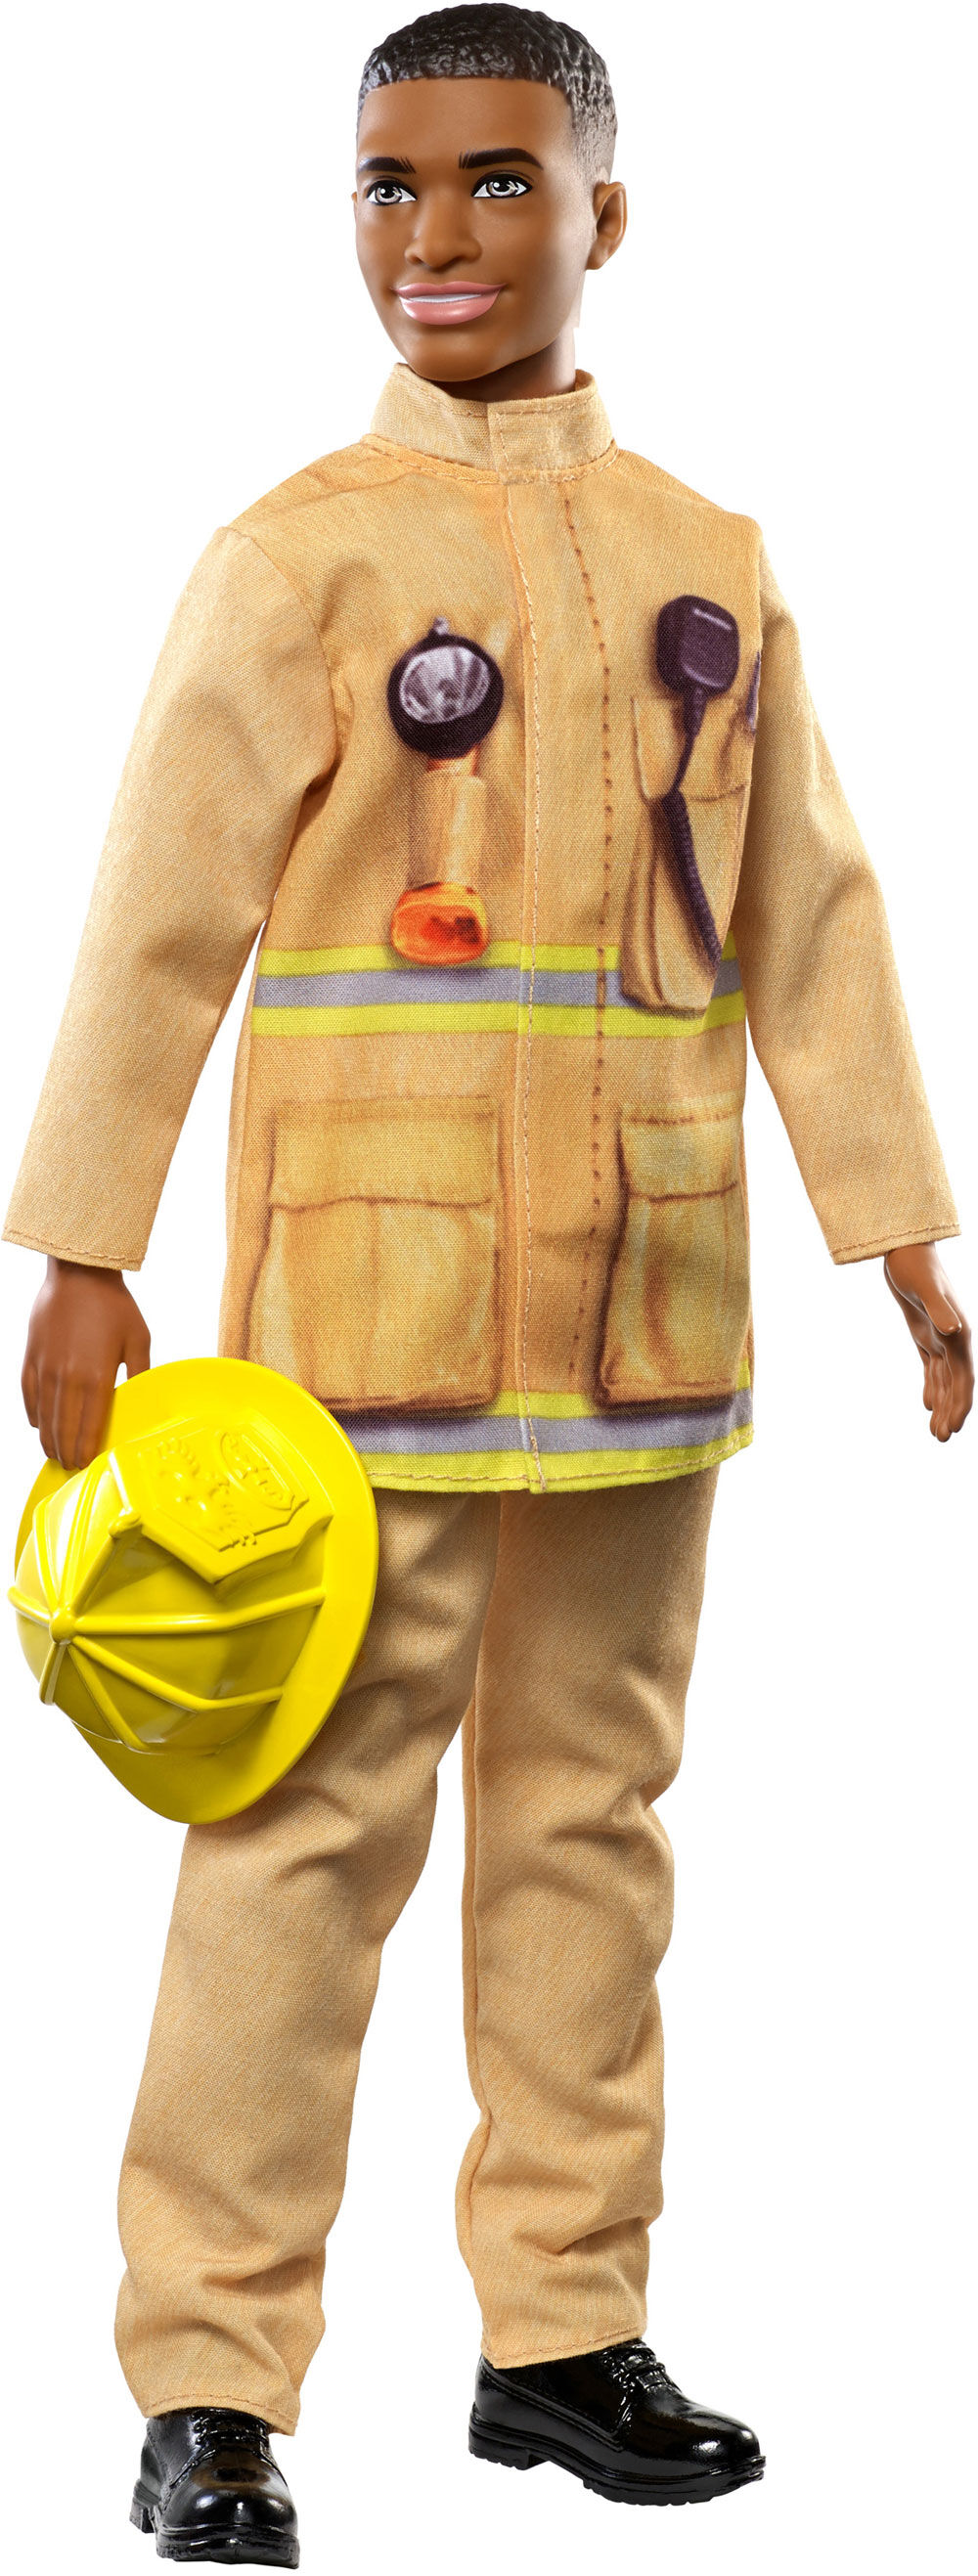 firefighter ken doll